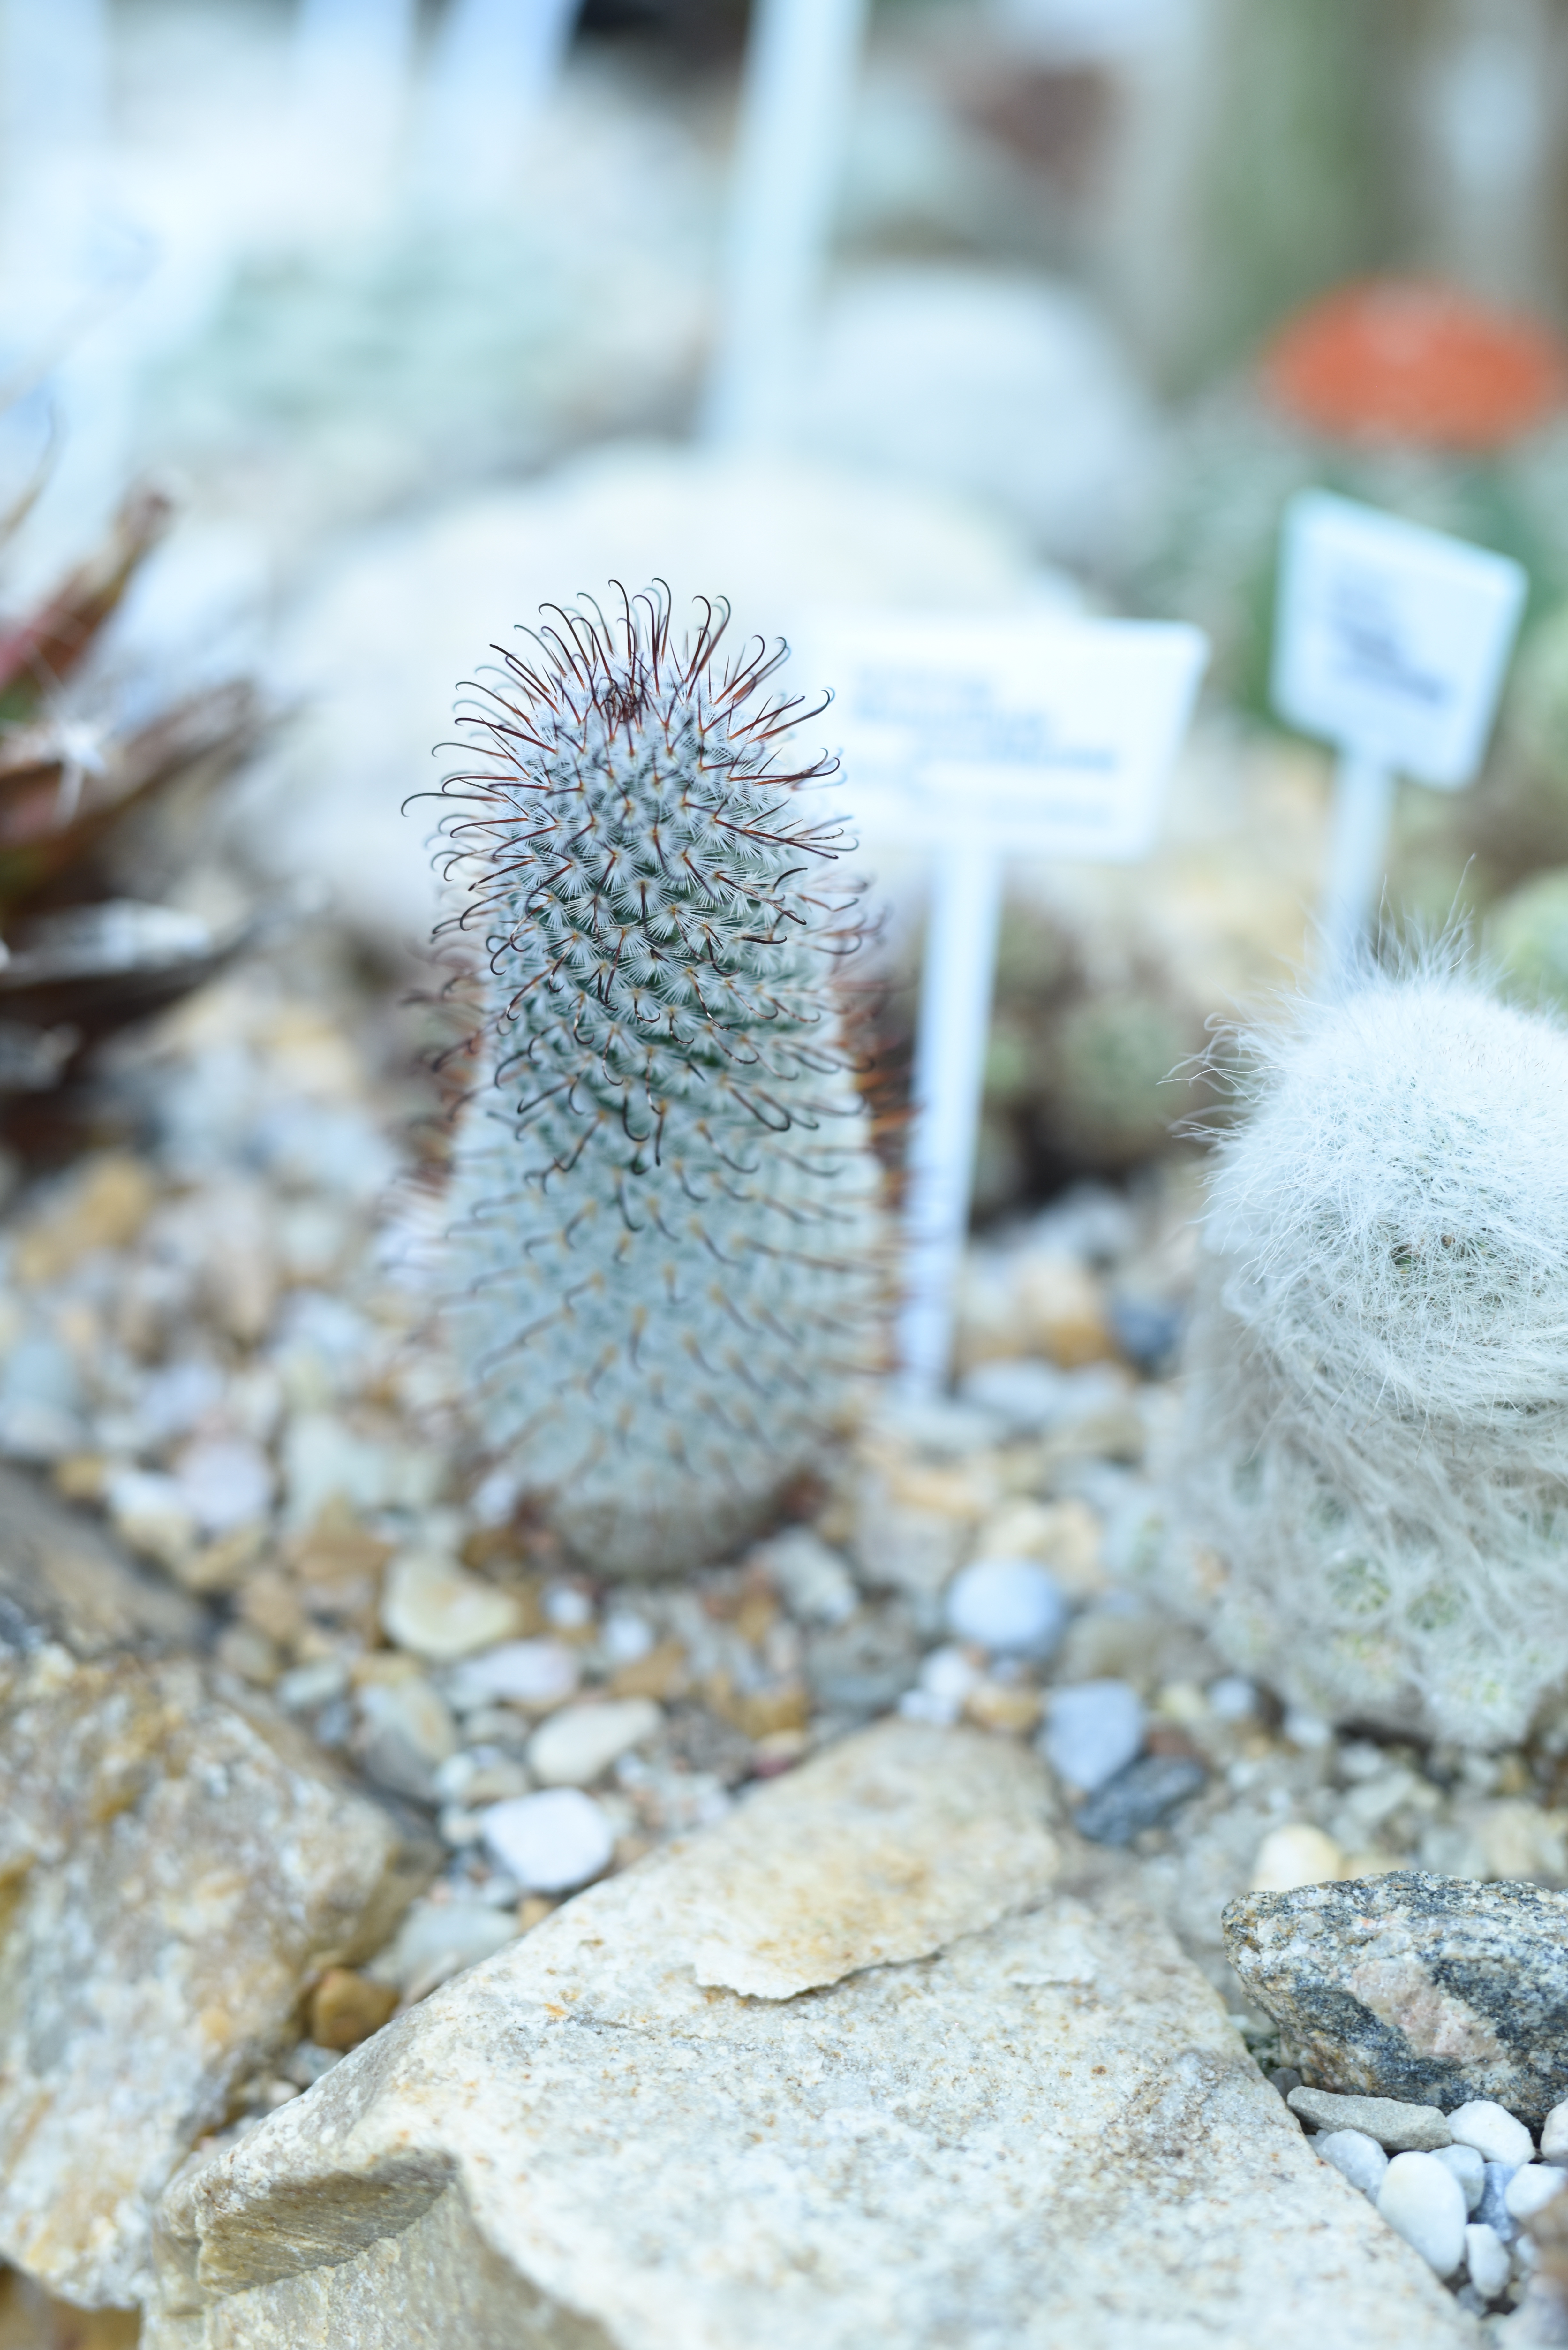 File:Mammillaria tetrancistra (fishhook cactus).jpg - Wikipedia